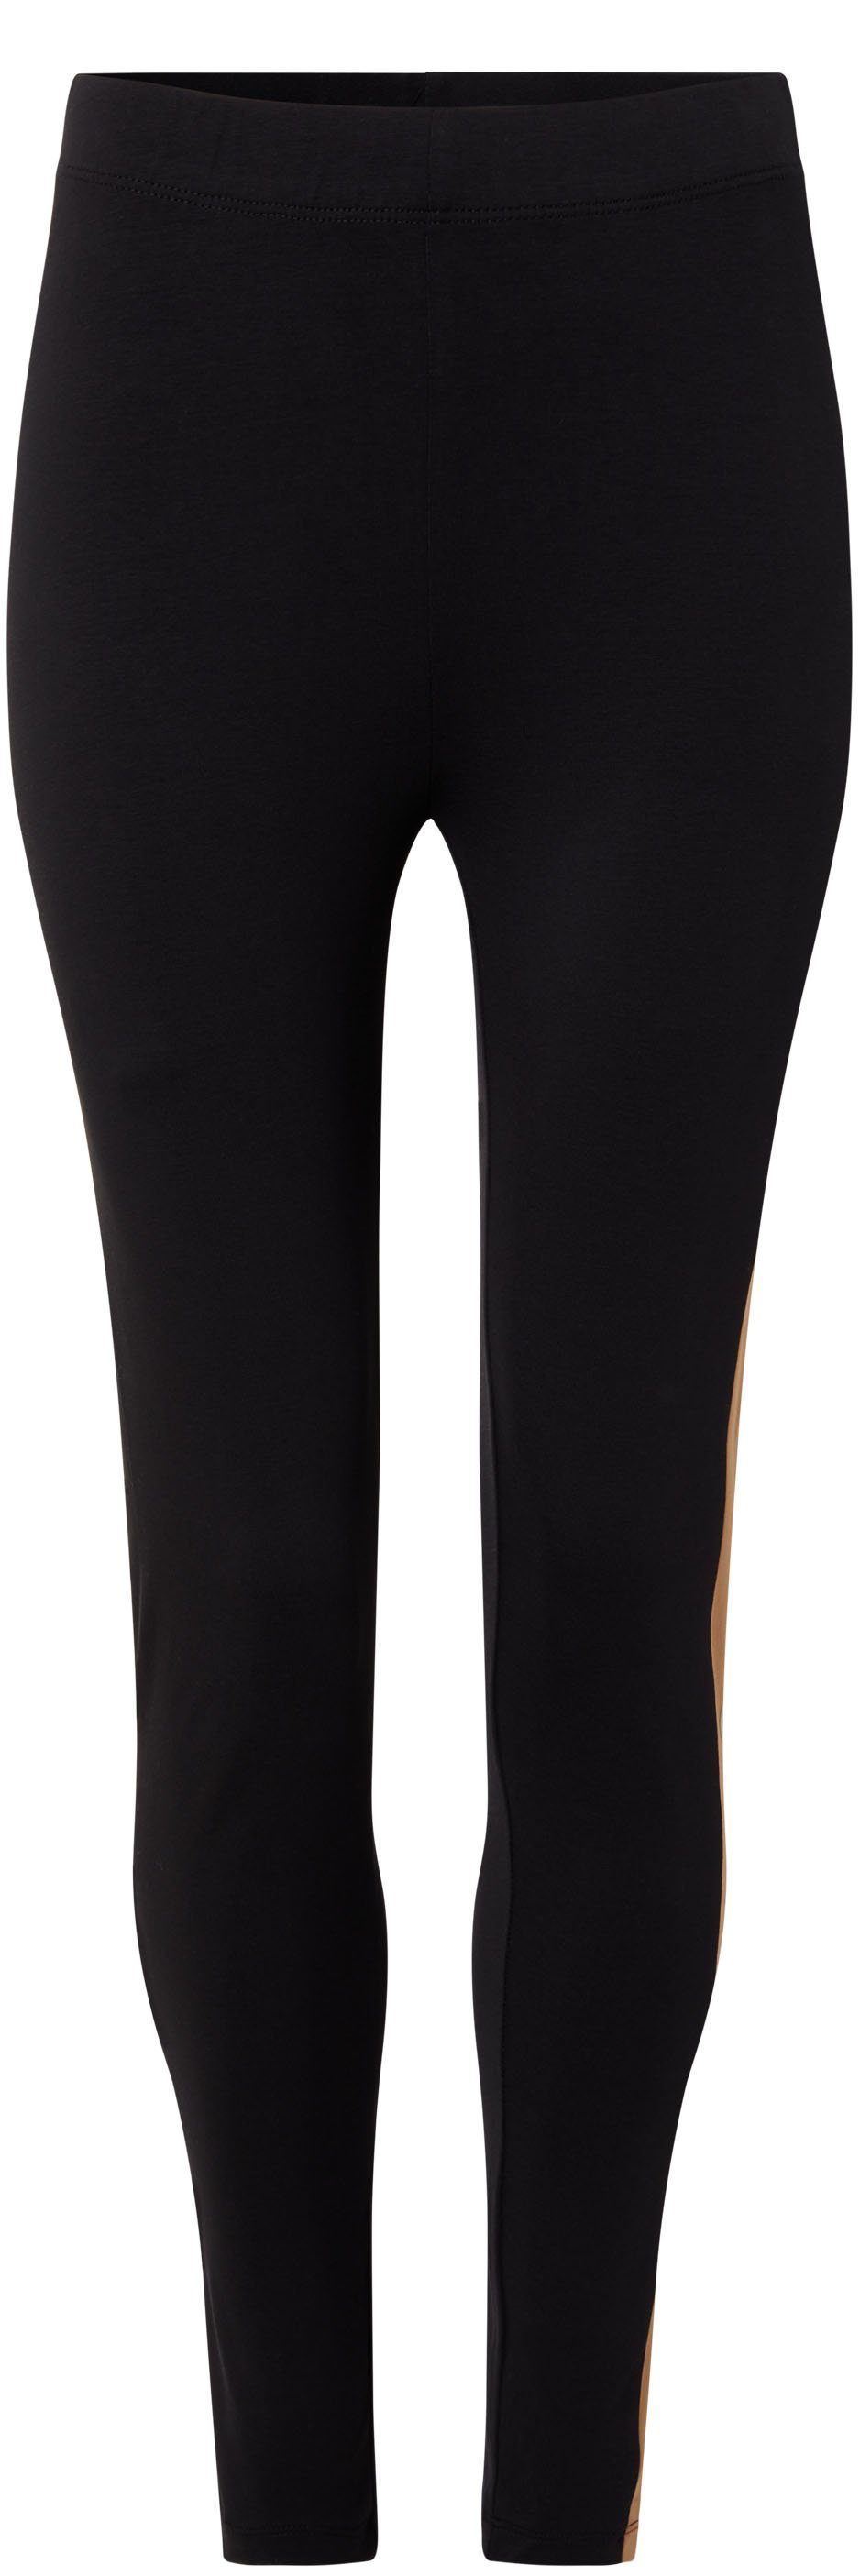 Calvin Klein Jeans Ck Black/ LEGGINGS in CK-Schriftzug Kontrastfarbe mit Camel COLOR BLOCKING Leggings Timeless